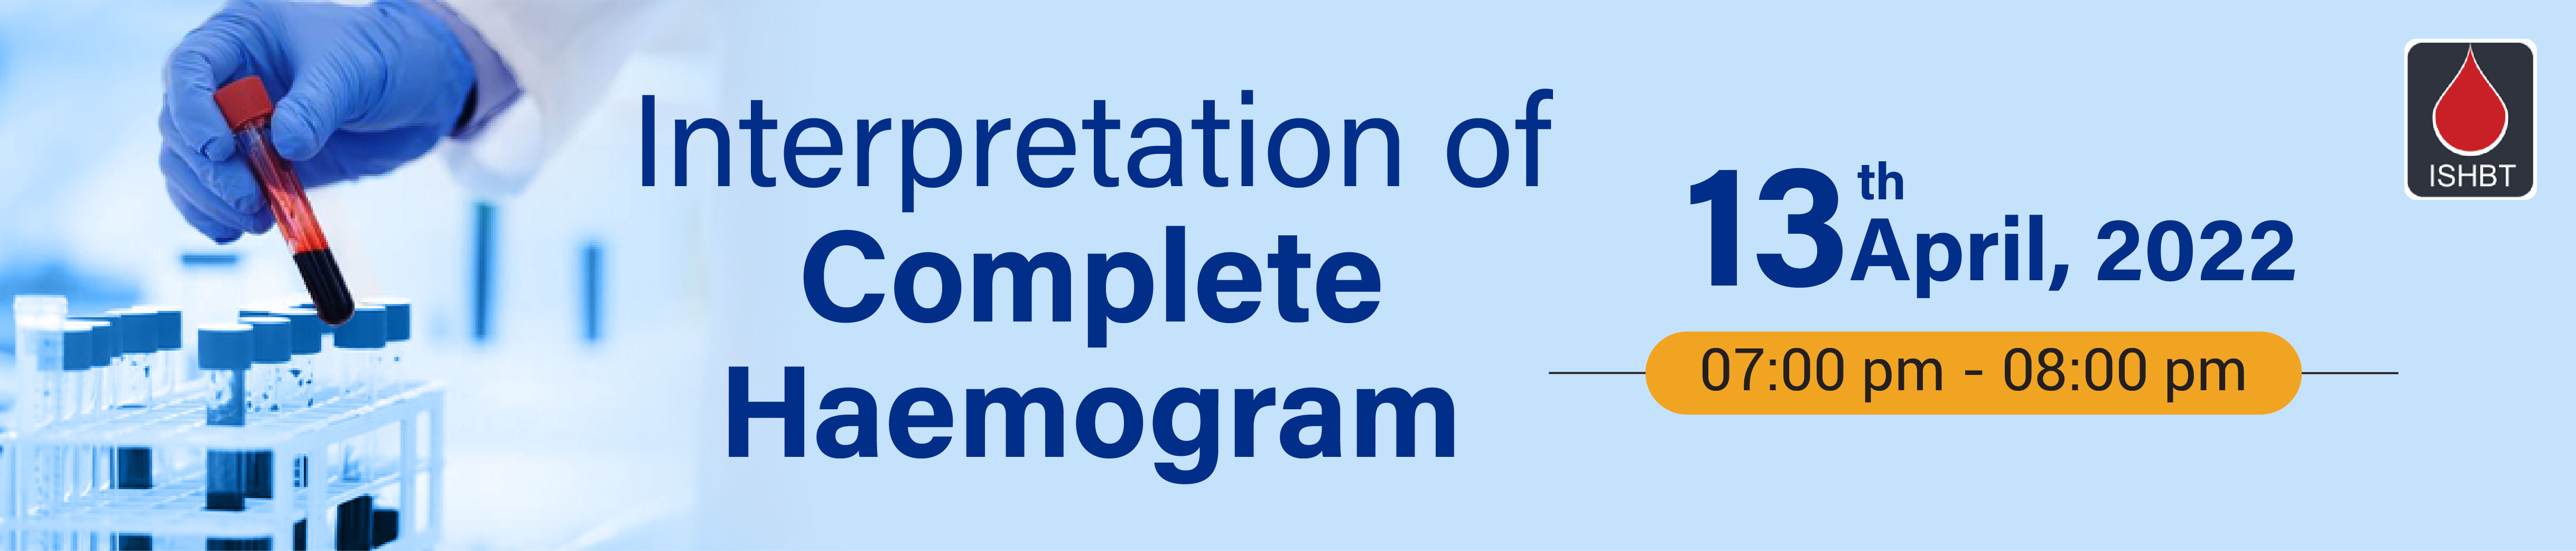 Interpretation of Complete Haemogram